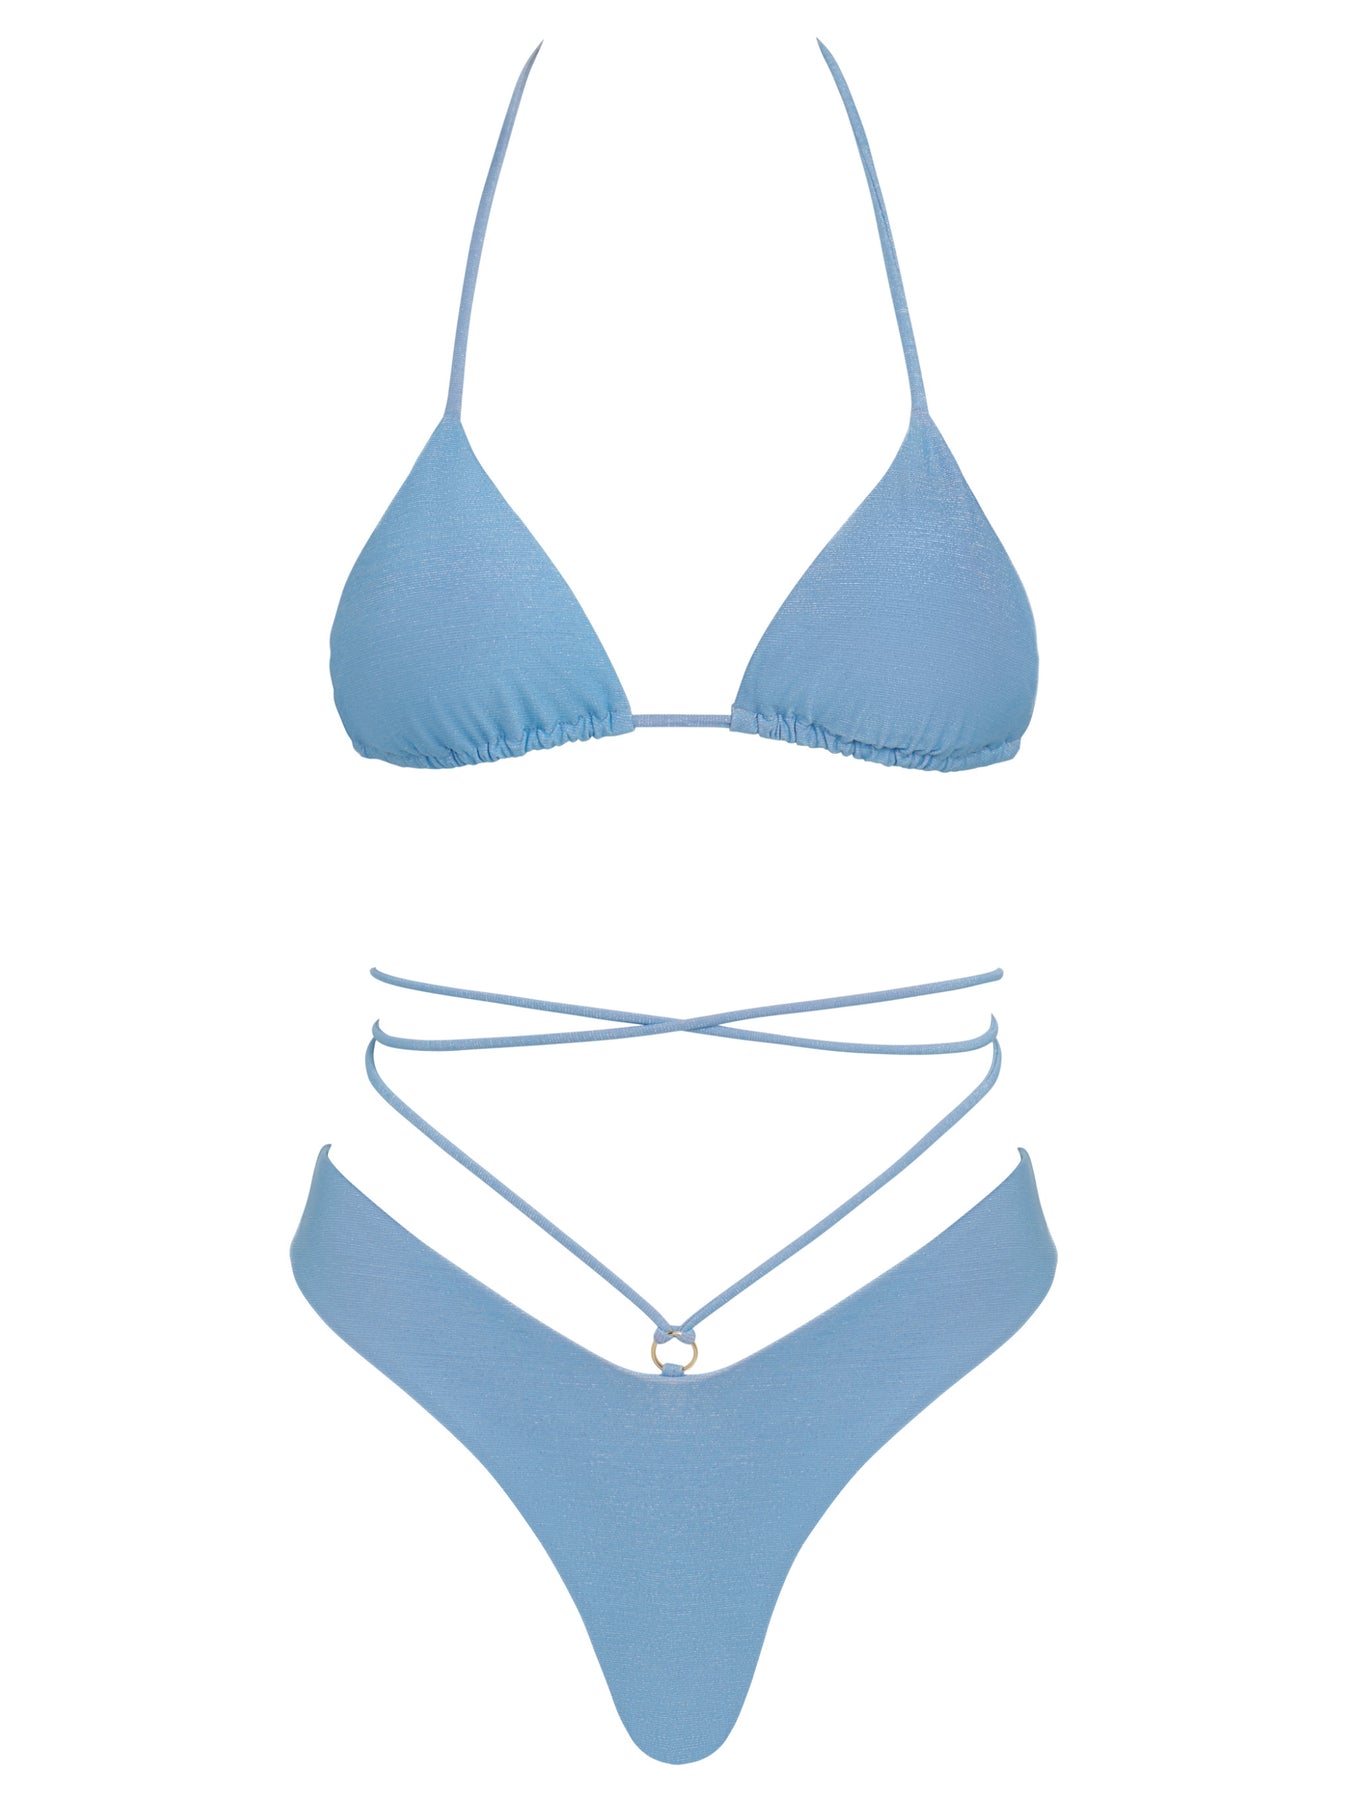 Light blue wrap tie bikini bottoms with matching triangle top.